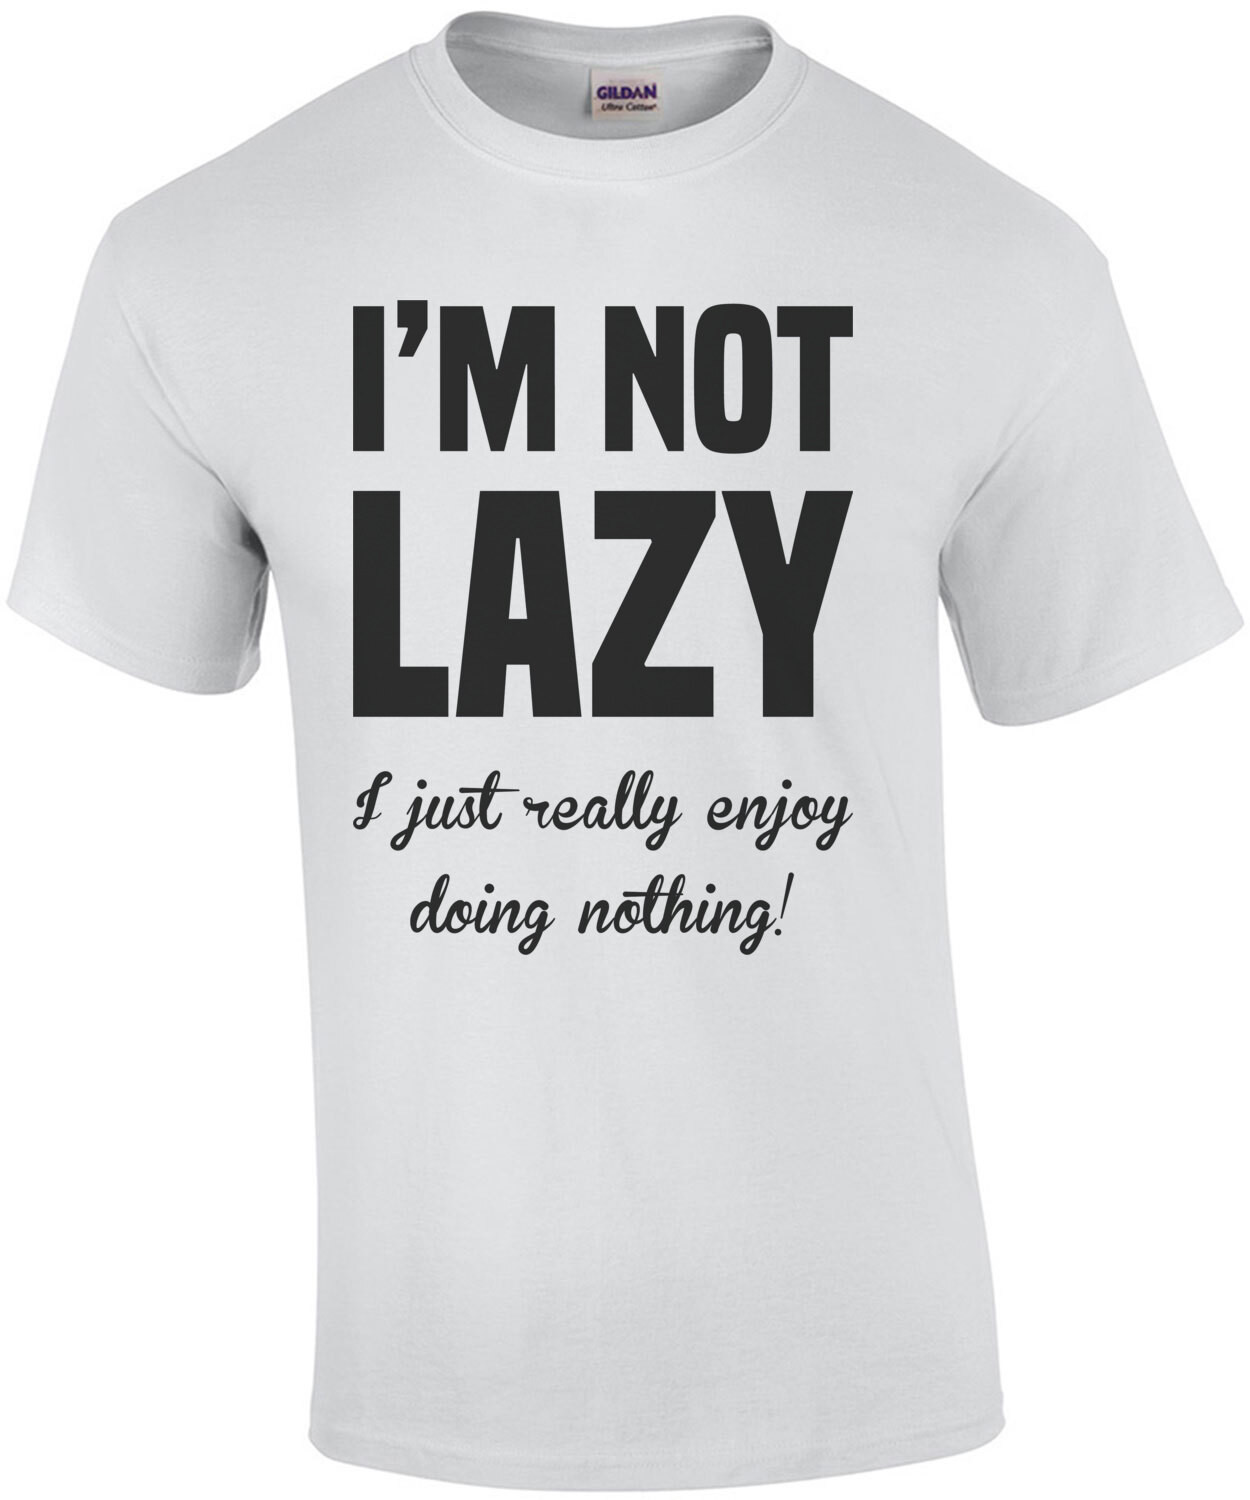 I'm not lazy - I just really enjoy doing nothing. funny sarcastic t-shirt